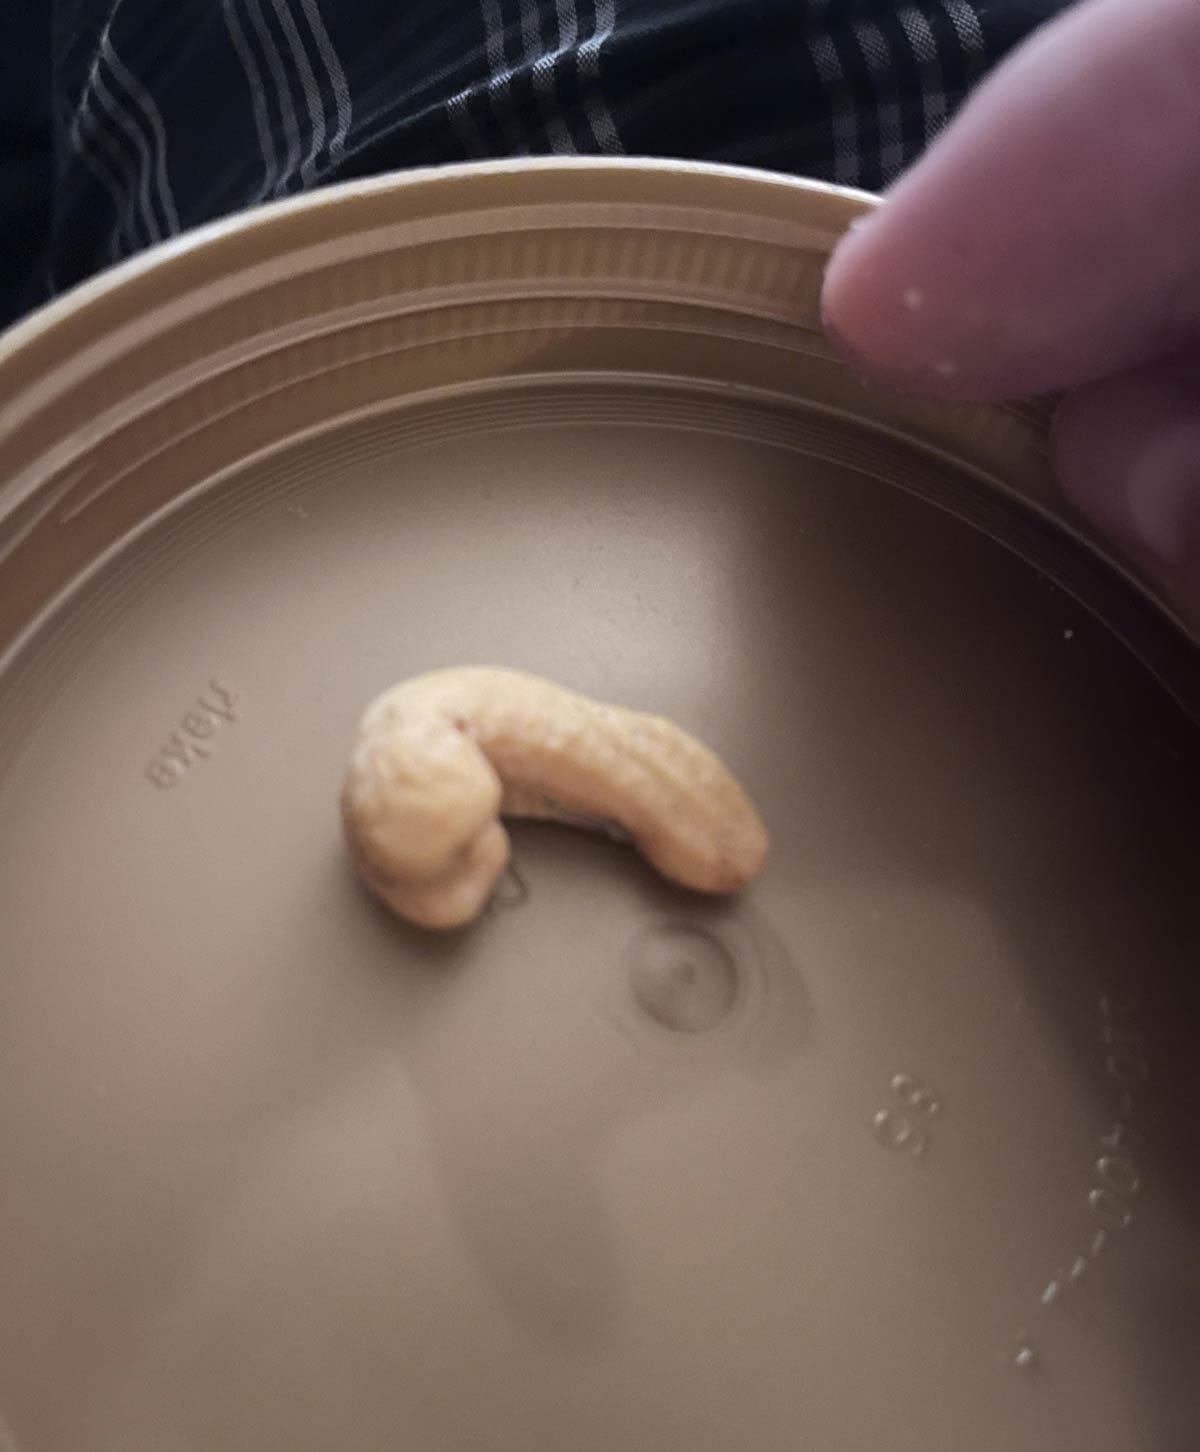 Interestingly shaped cashew